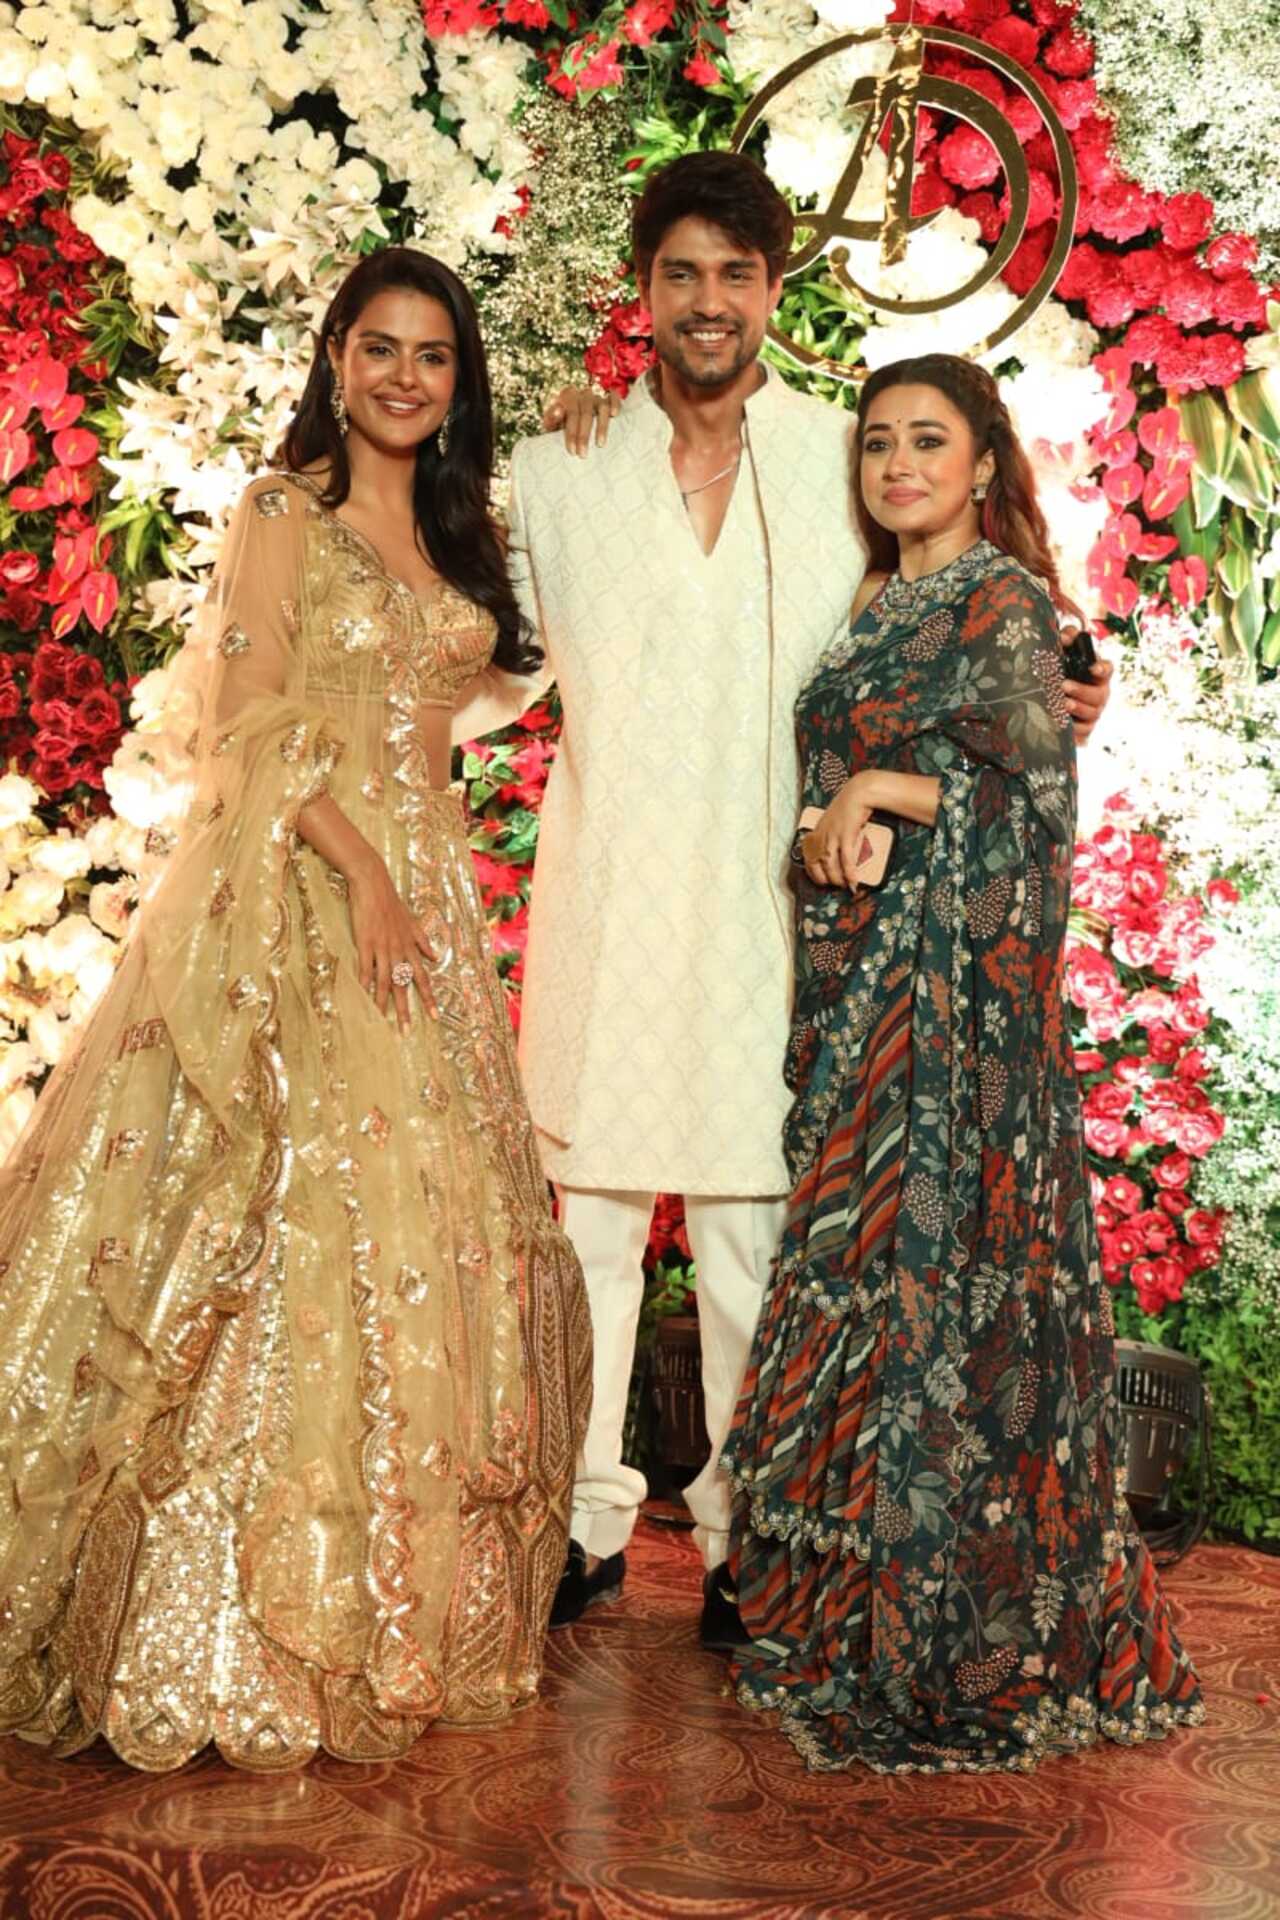 Priyanka, Ankit and Tina Dutta pose together